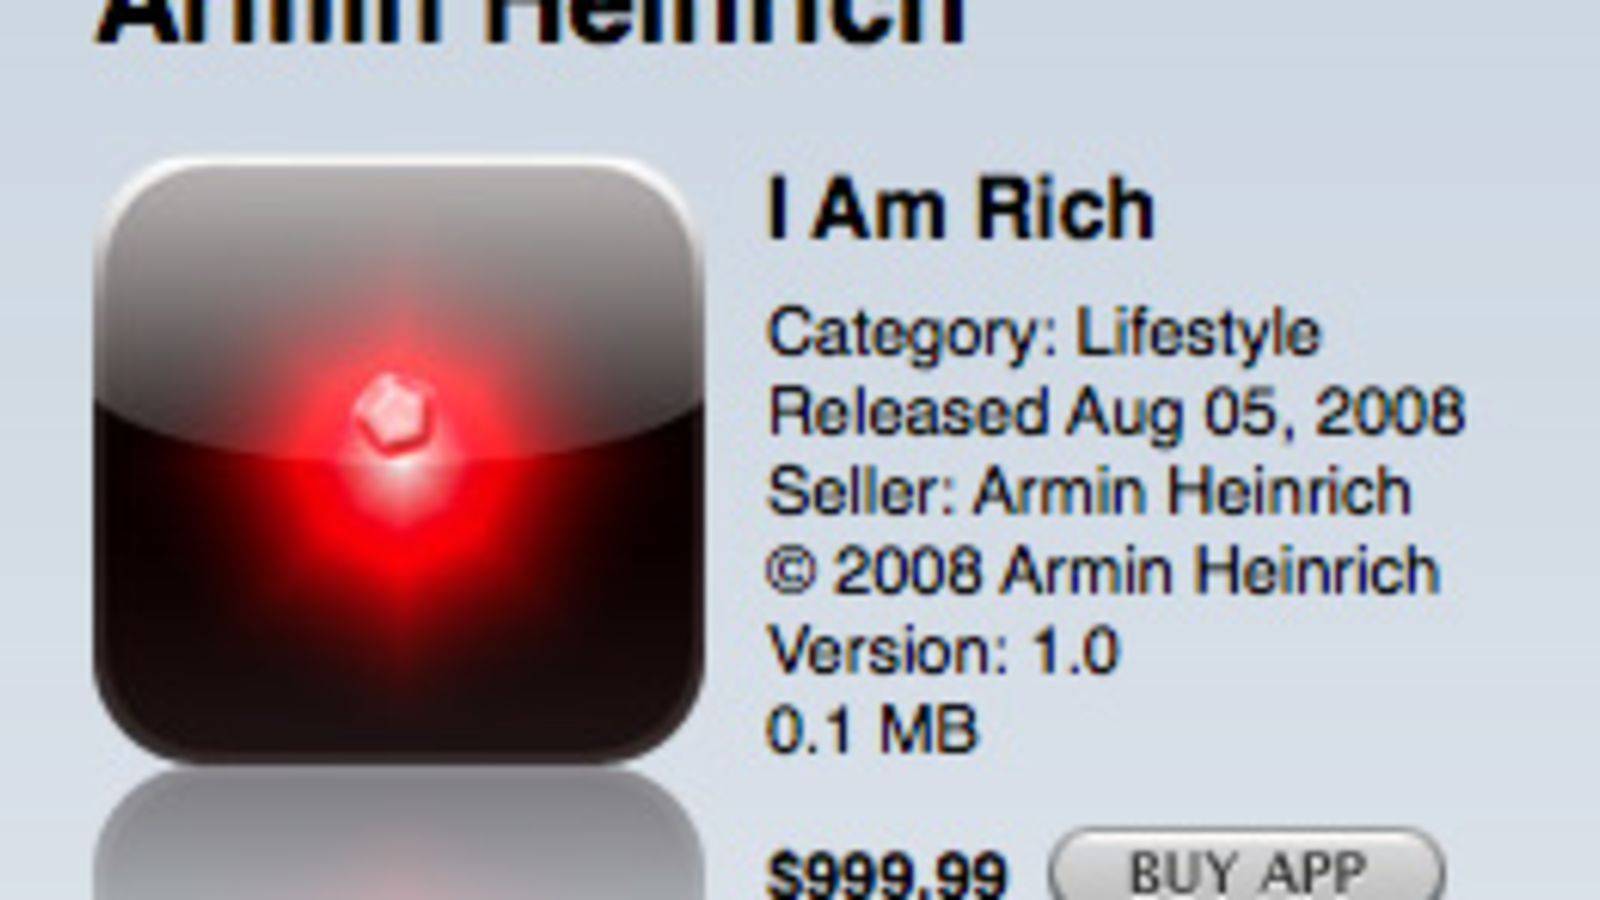 I Am Rich App